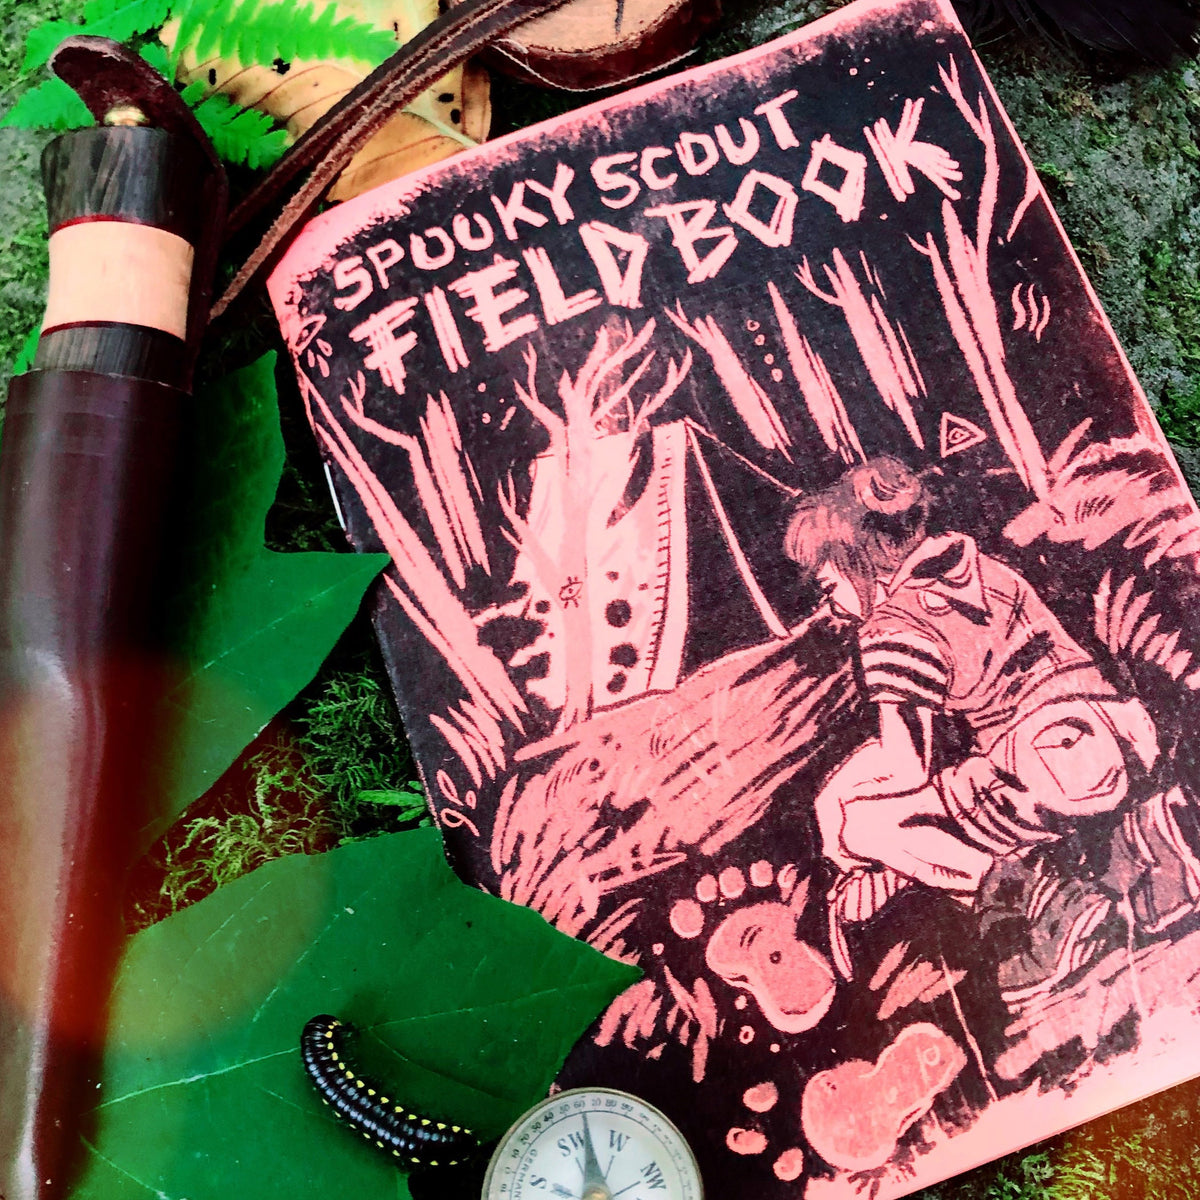 Spooky Scout Field Book - Physisches Copy-Zine mit Aufkleber!